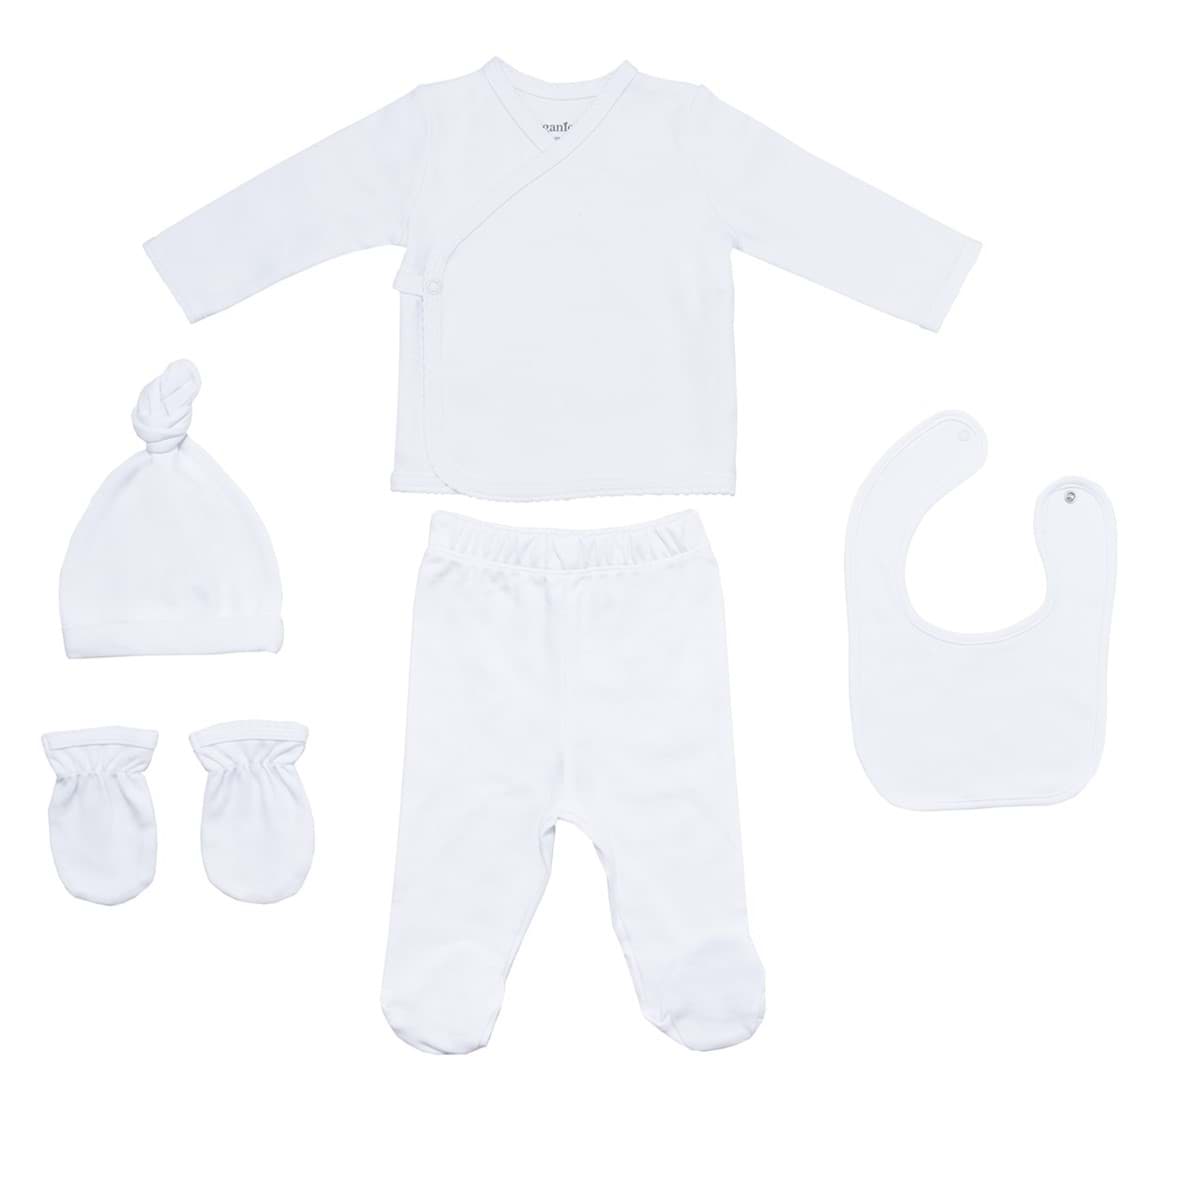 Picture of Basic White Crochet Newborn Set of 5